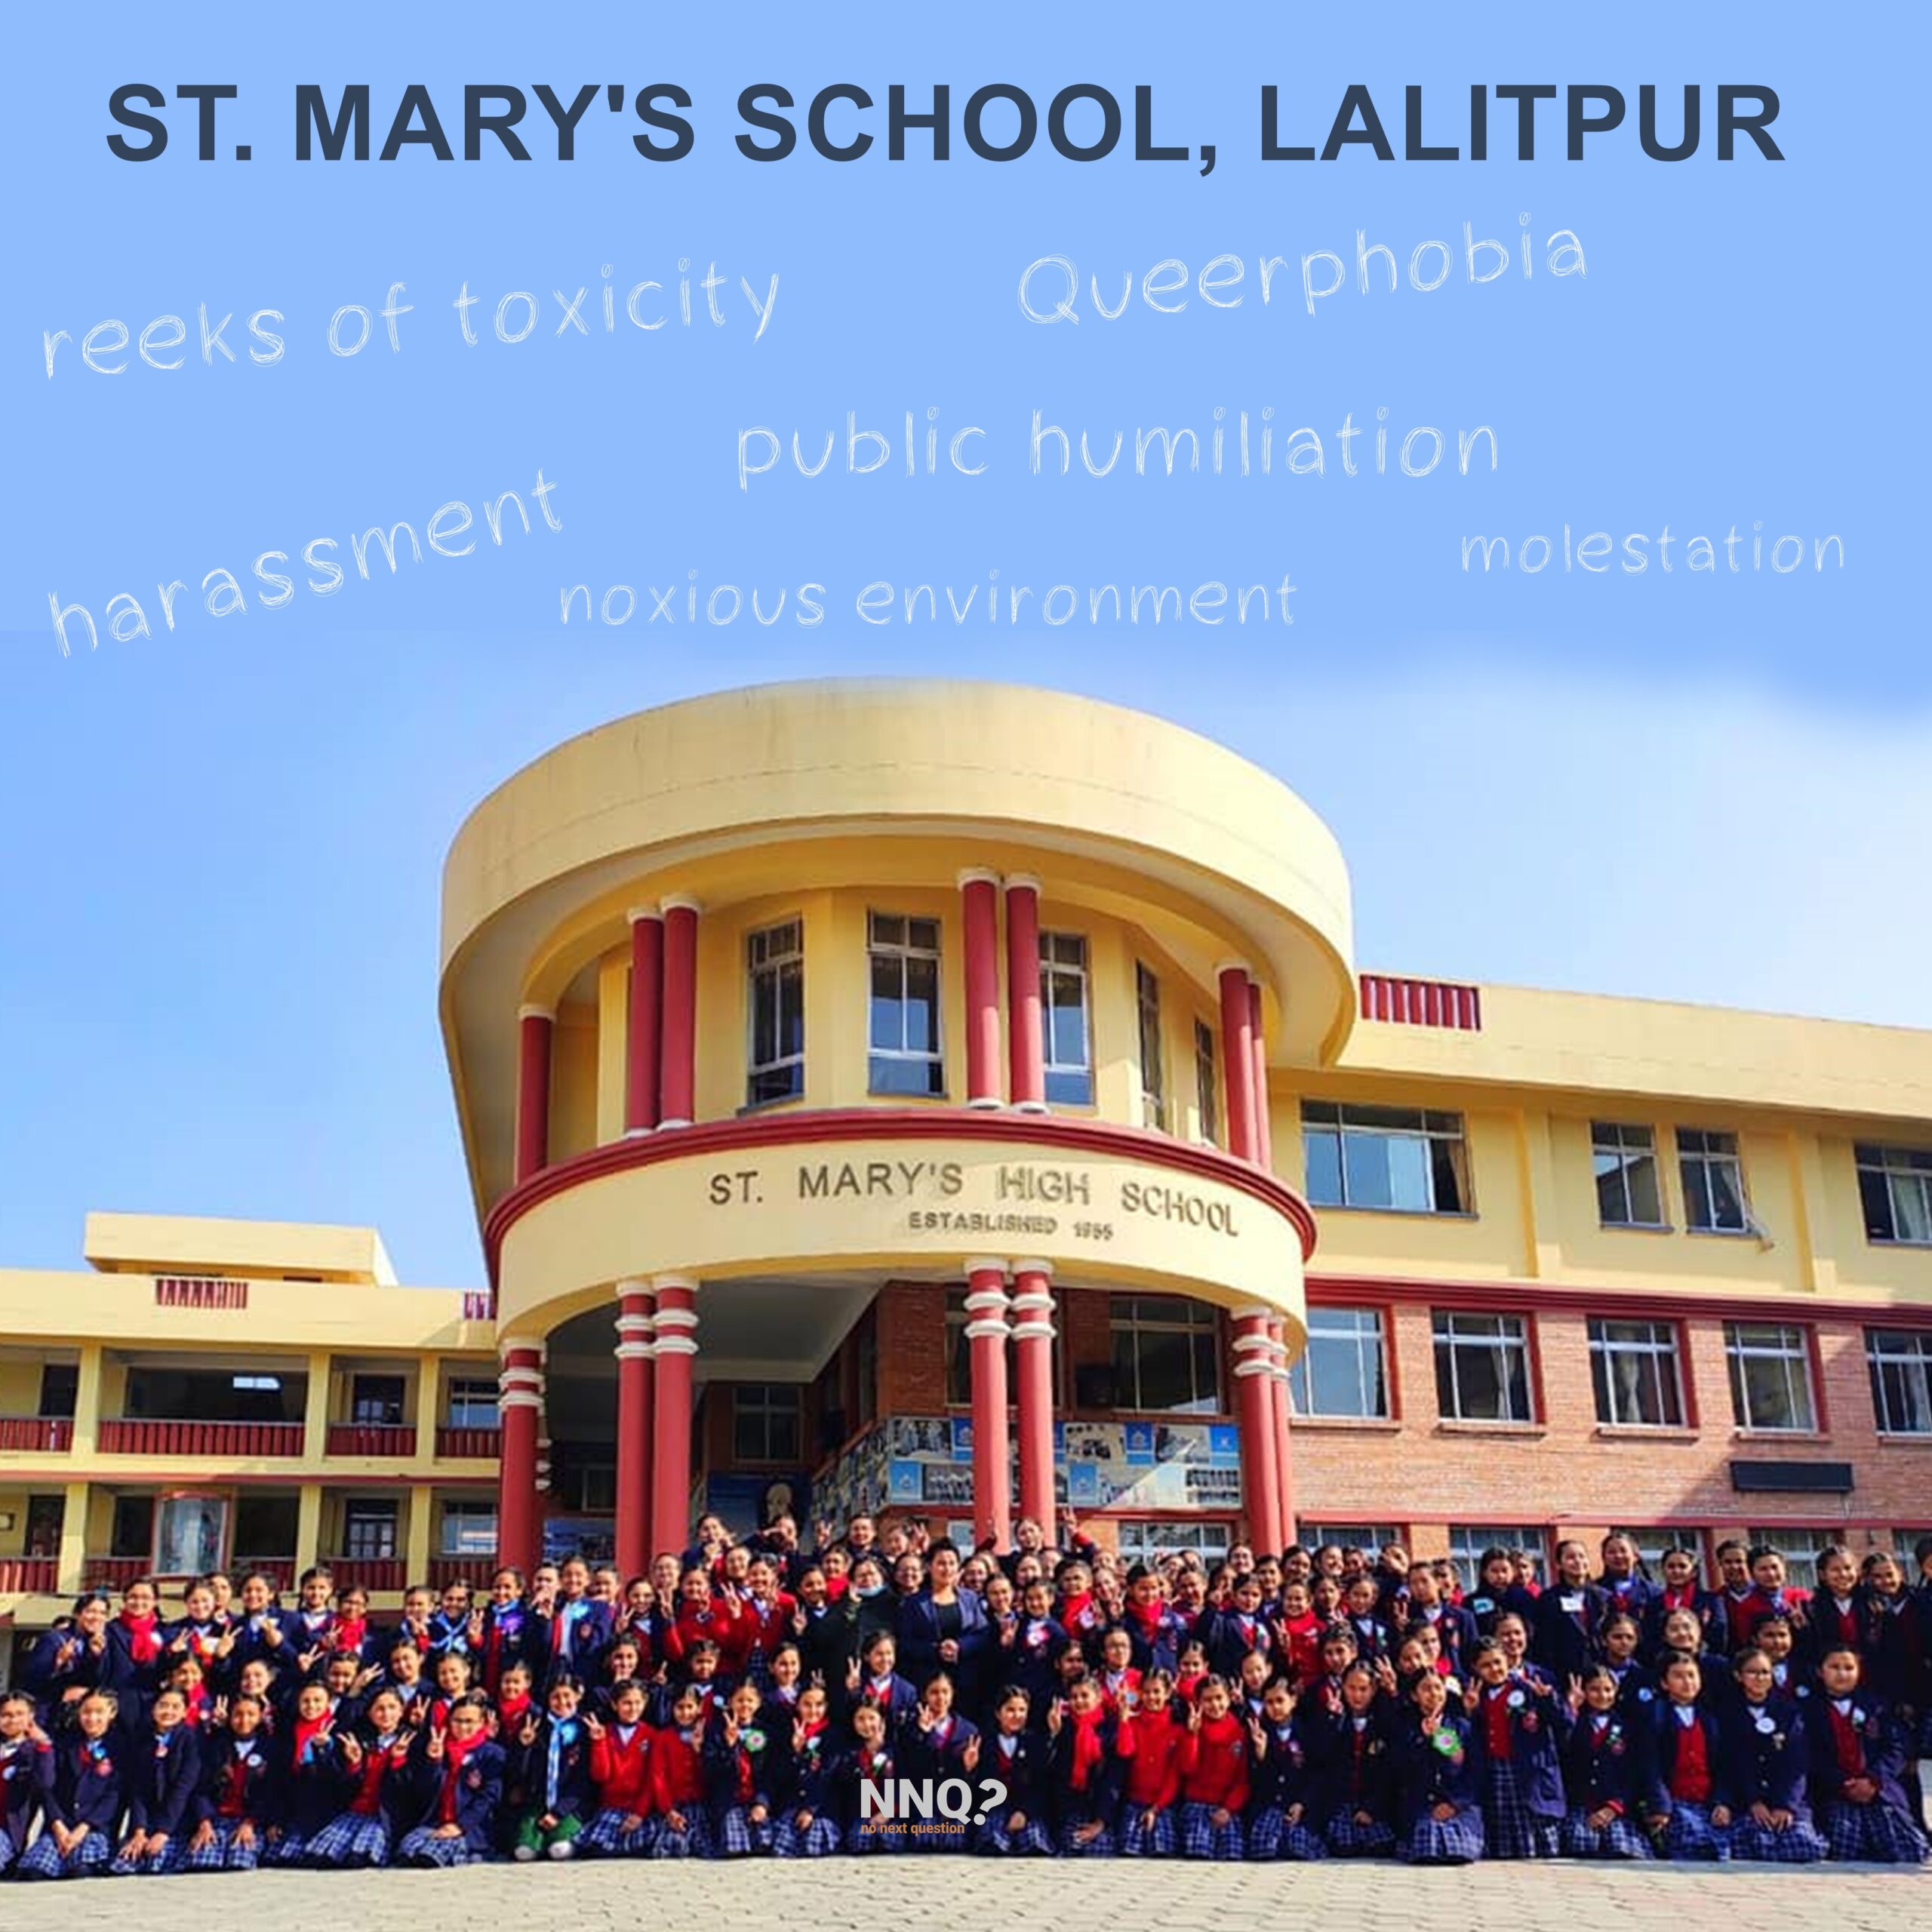 St. Mary’s School, Lalitpur, Nepal